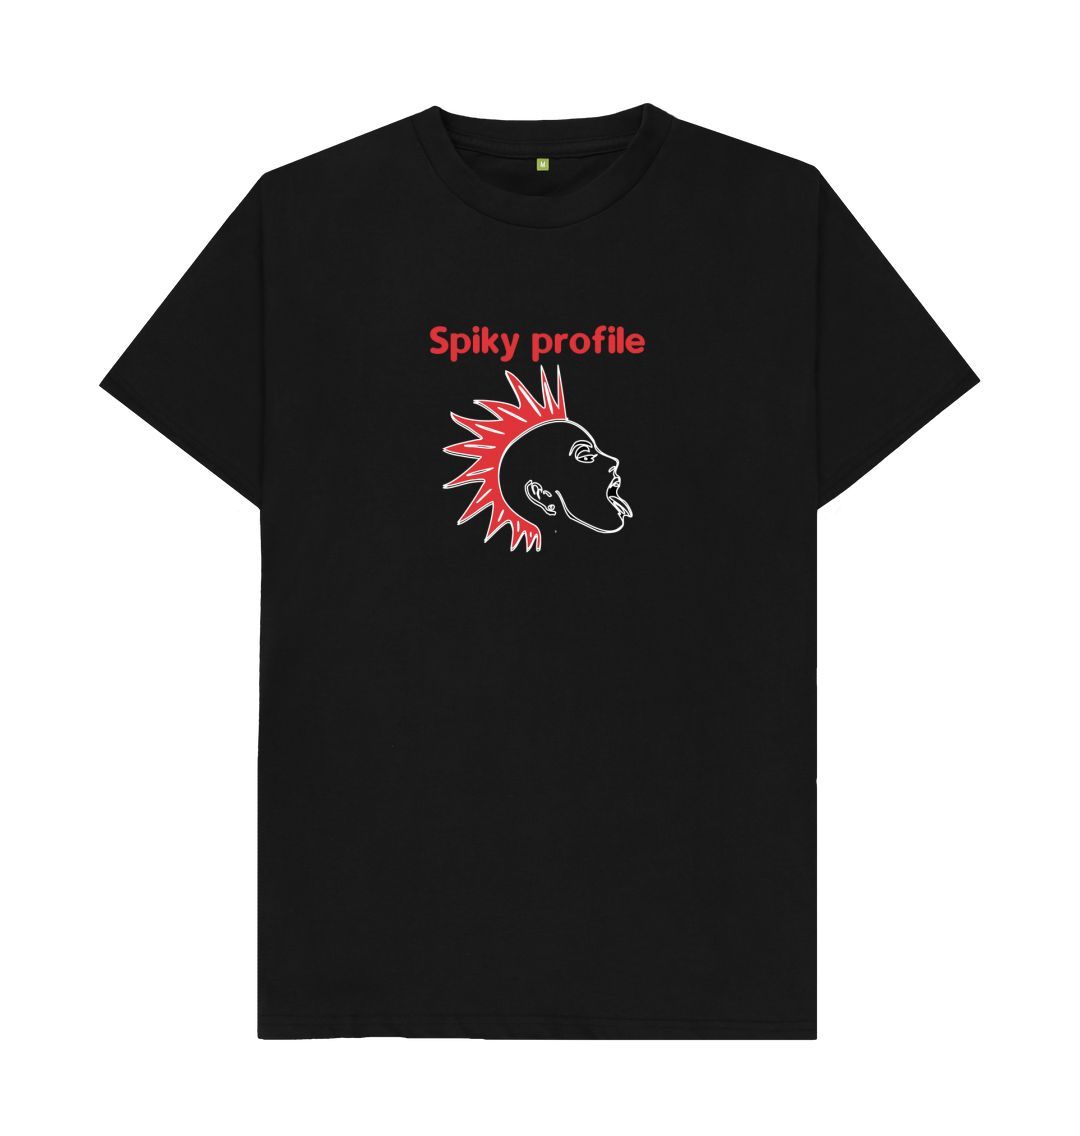 Black Spiky profile unisex T-shirt